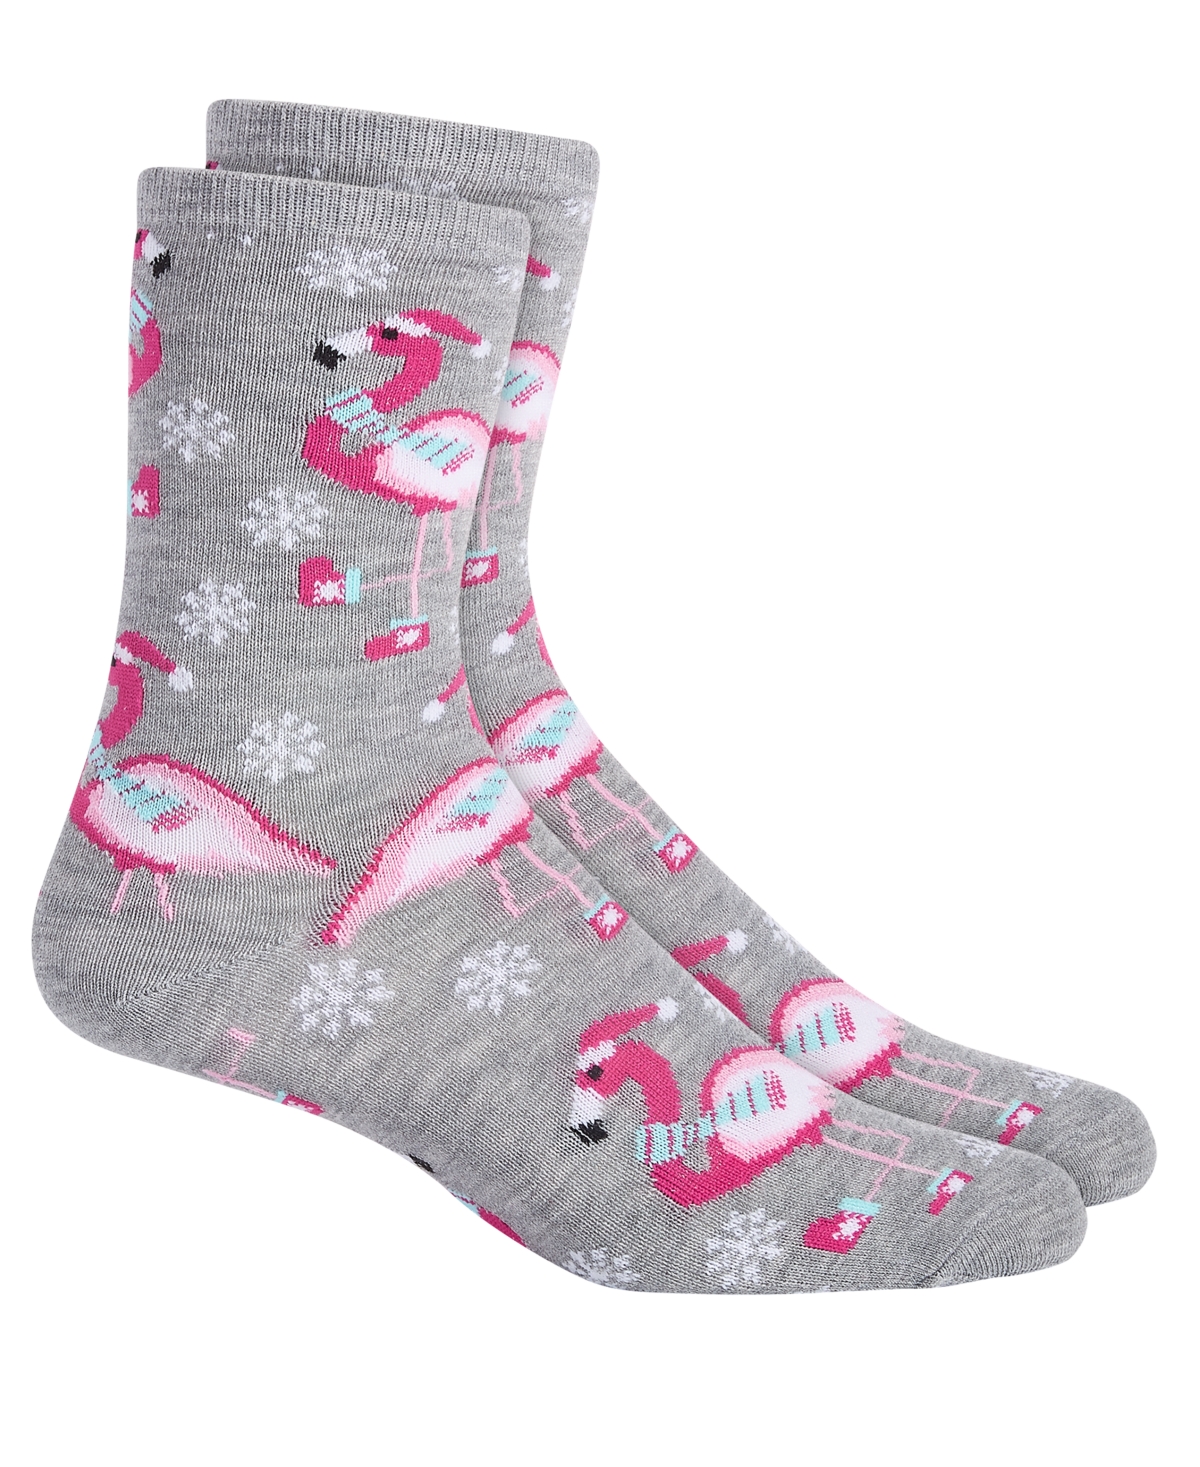 Holiday Crew Socks, Created for Macy's - Flamingo